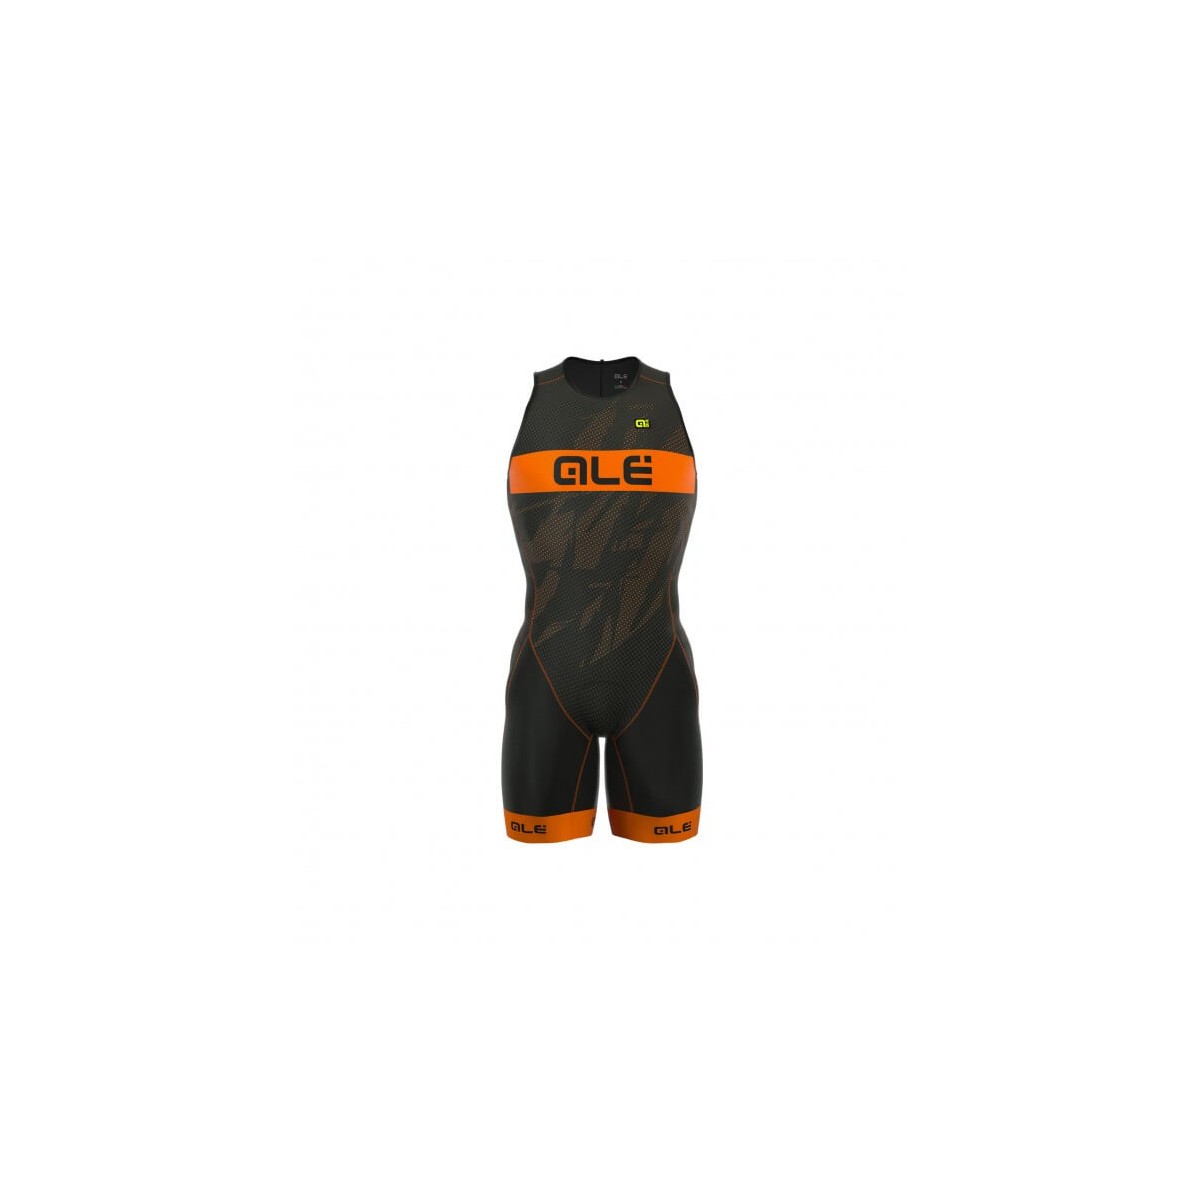 Body Alé Triathlon Olympic Tri Record Black Orange, Size S